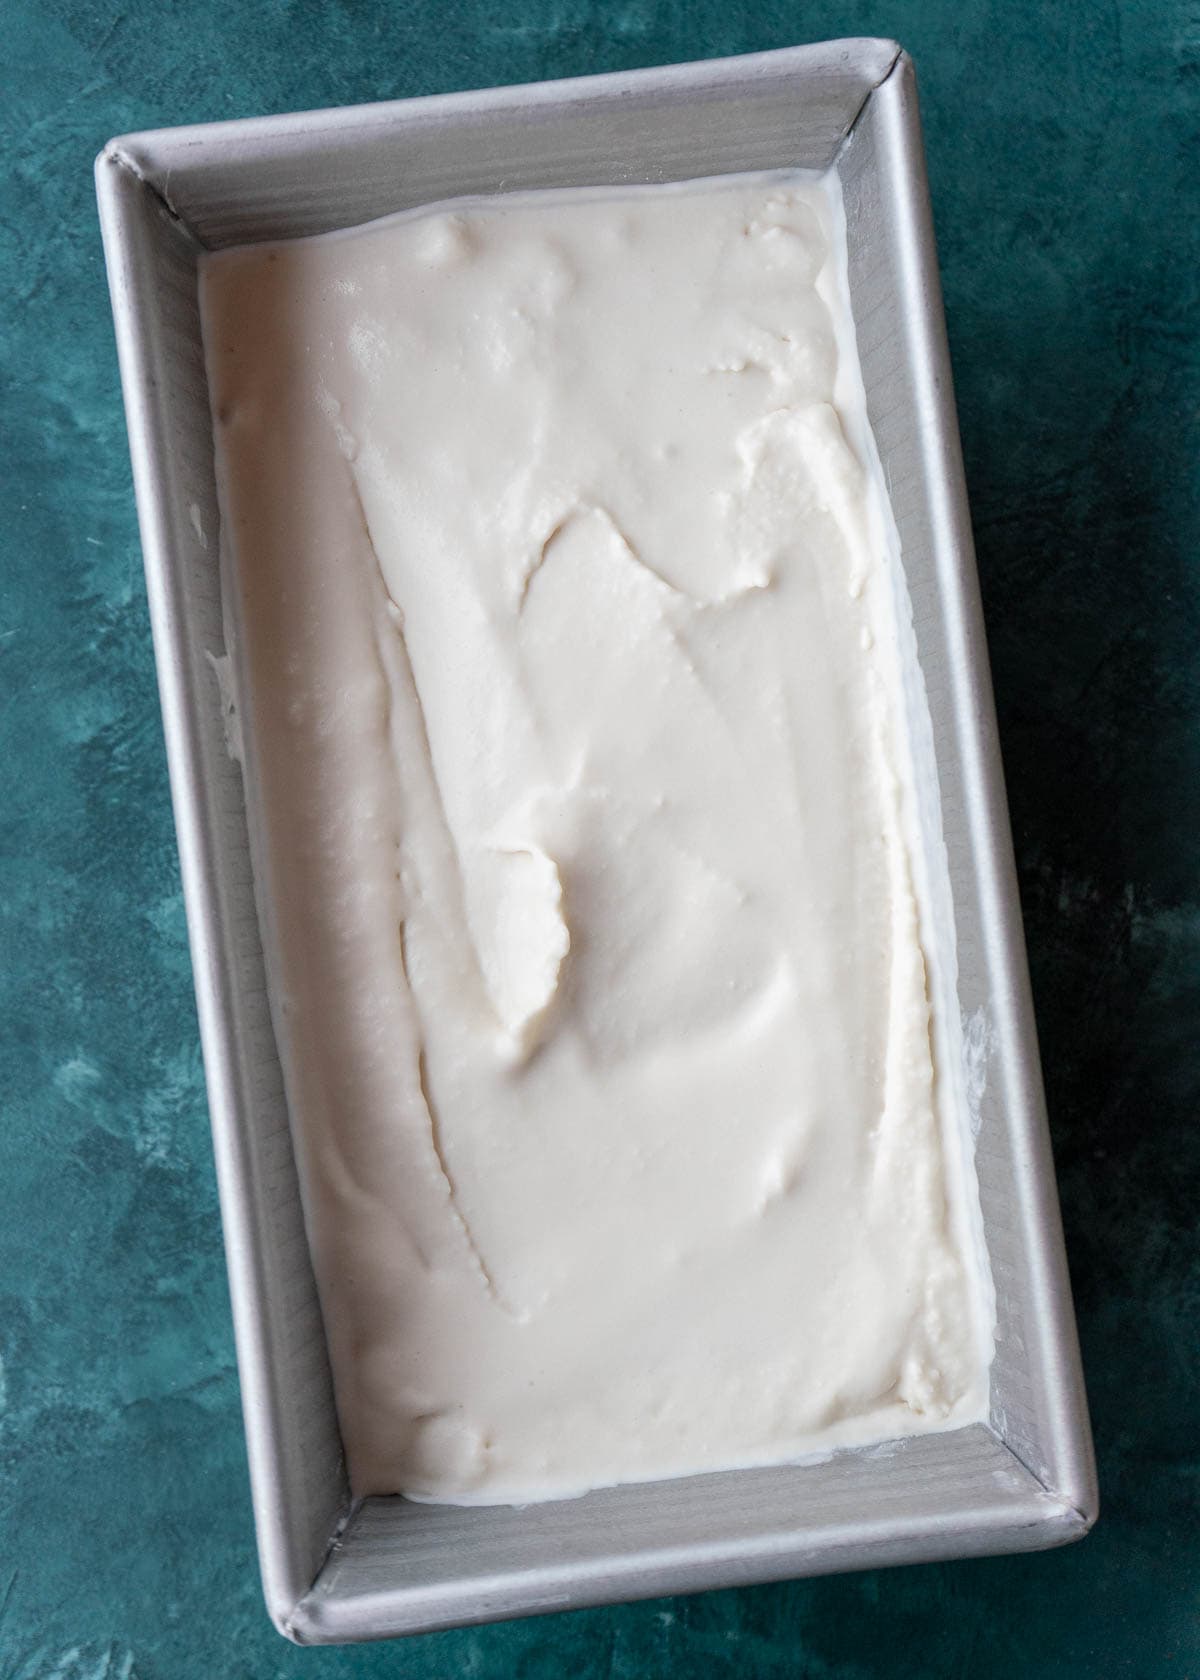 Unfrozen ice cream in a loaf pan